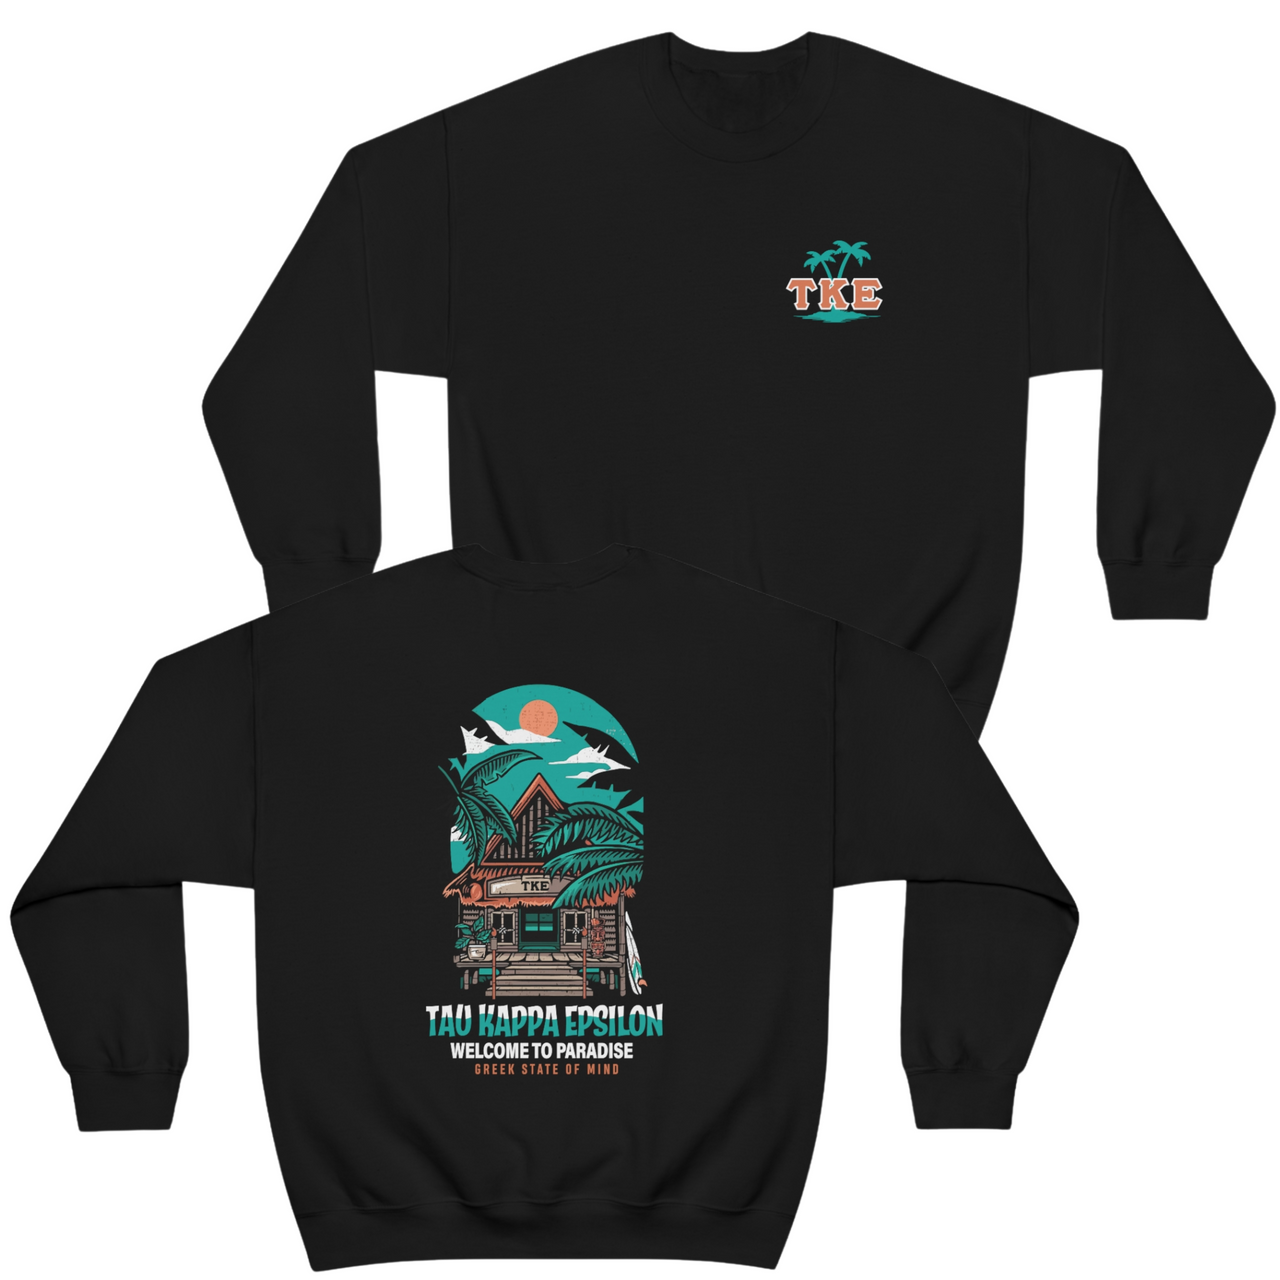 Black Tau Kappa Epsilon Graphic Crewneck Sweatshirt | Welcome to Paradise | Tau Kappa Epsilon Fraternity